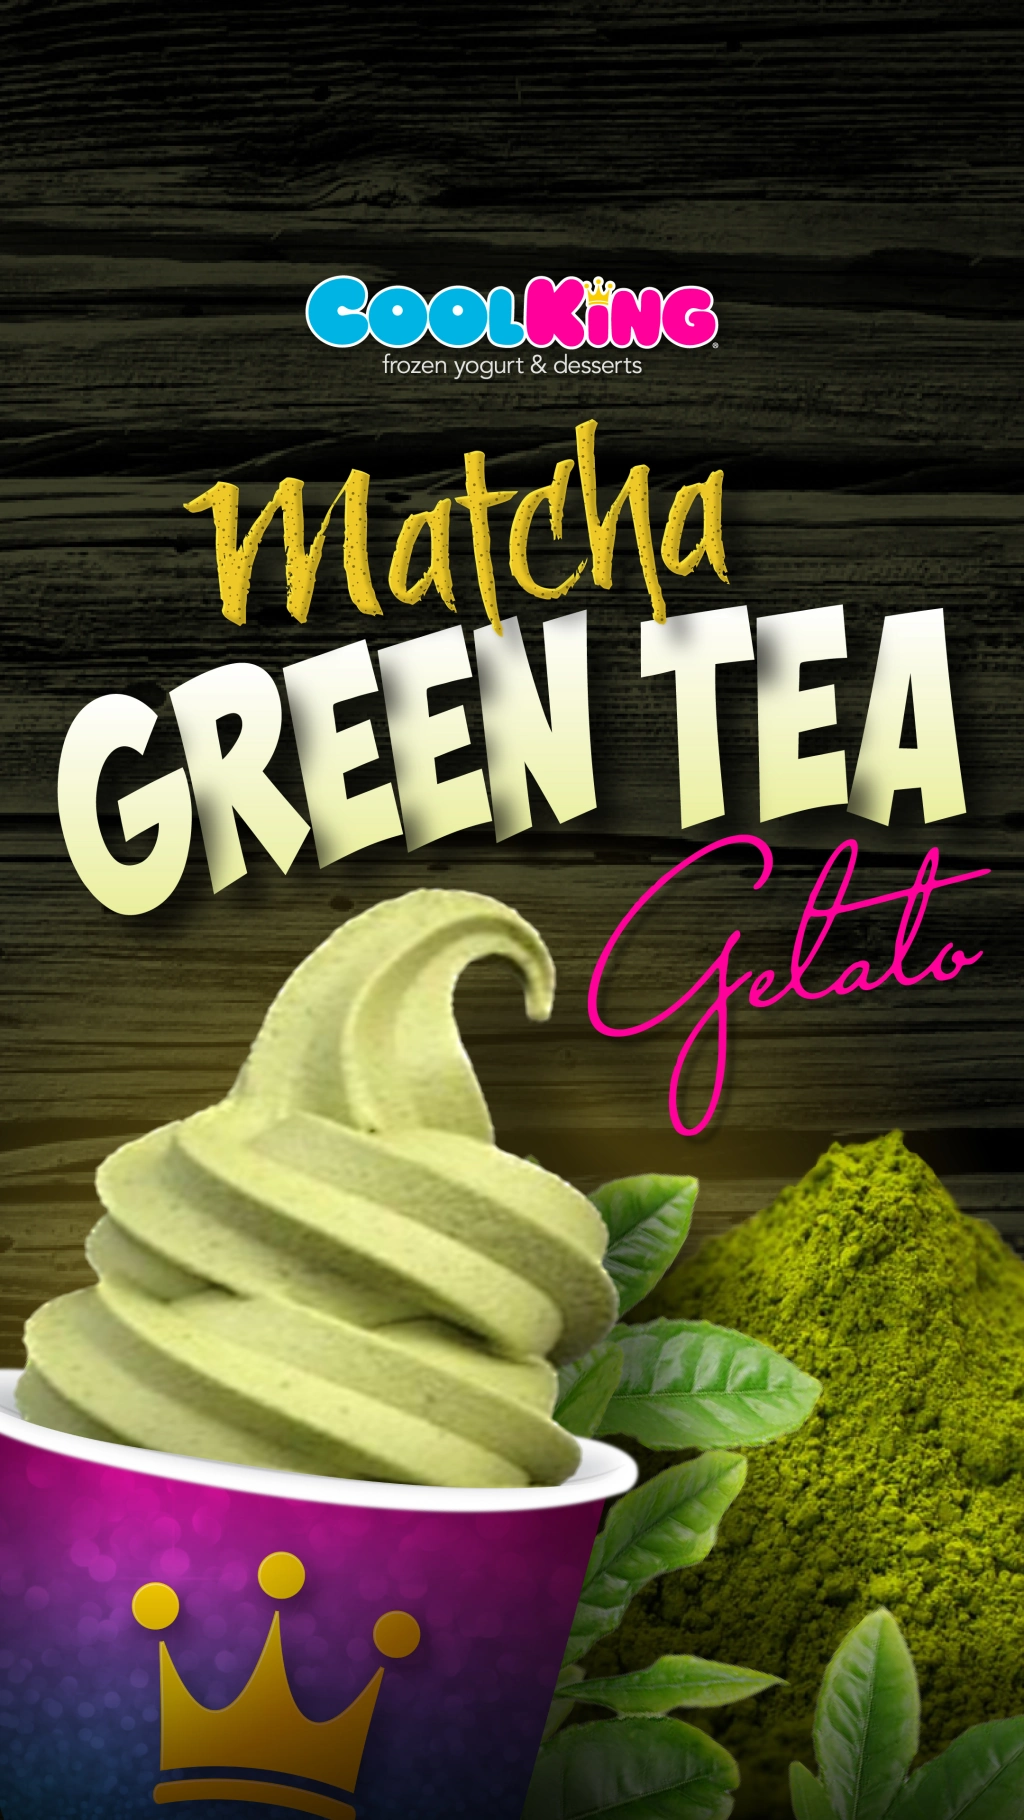 Cool King® “Matcha Green Tea” Gelato